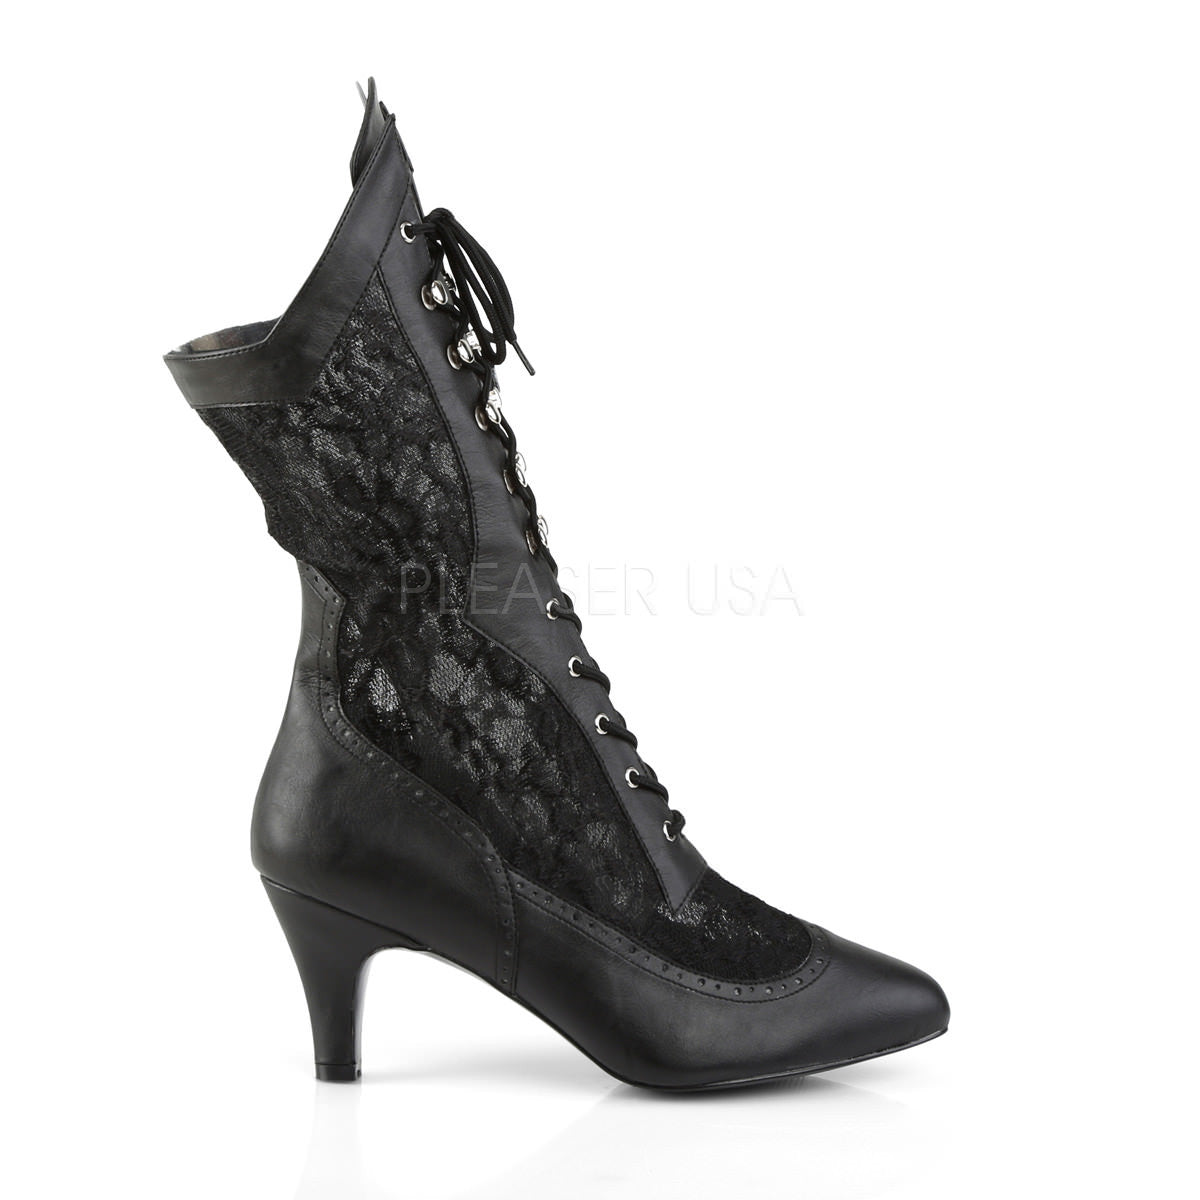 Maurices Women Mara Black High Heel Boot 8M 3 Inch Buckles Inside Zipper  Closure | eBay